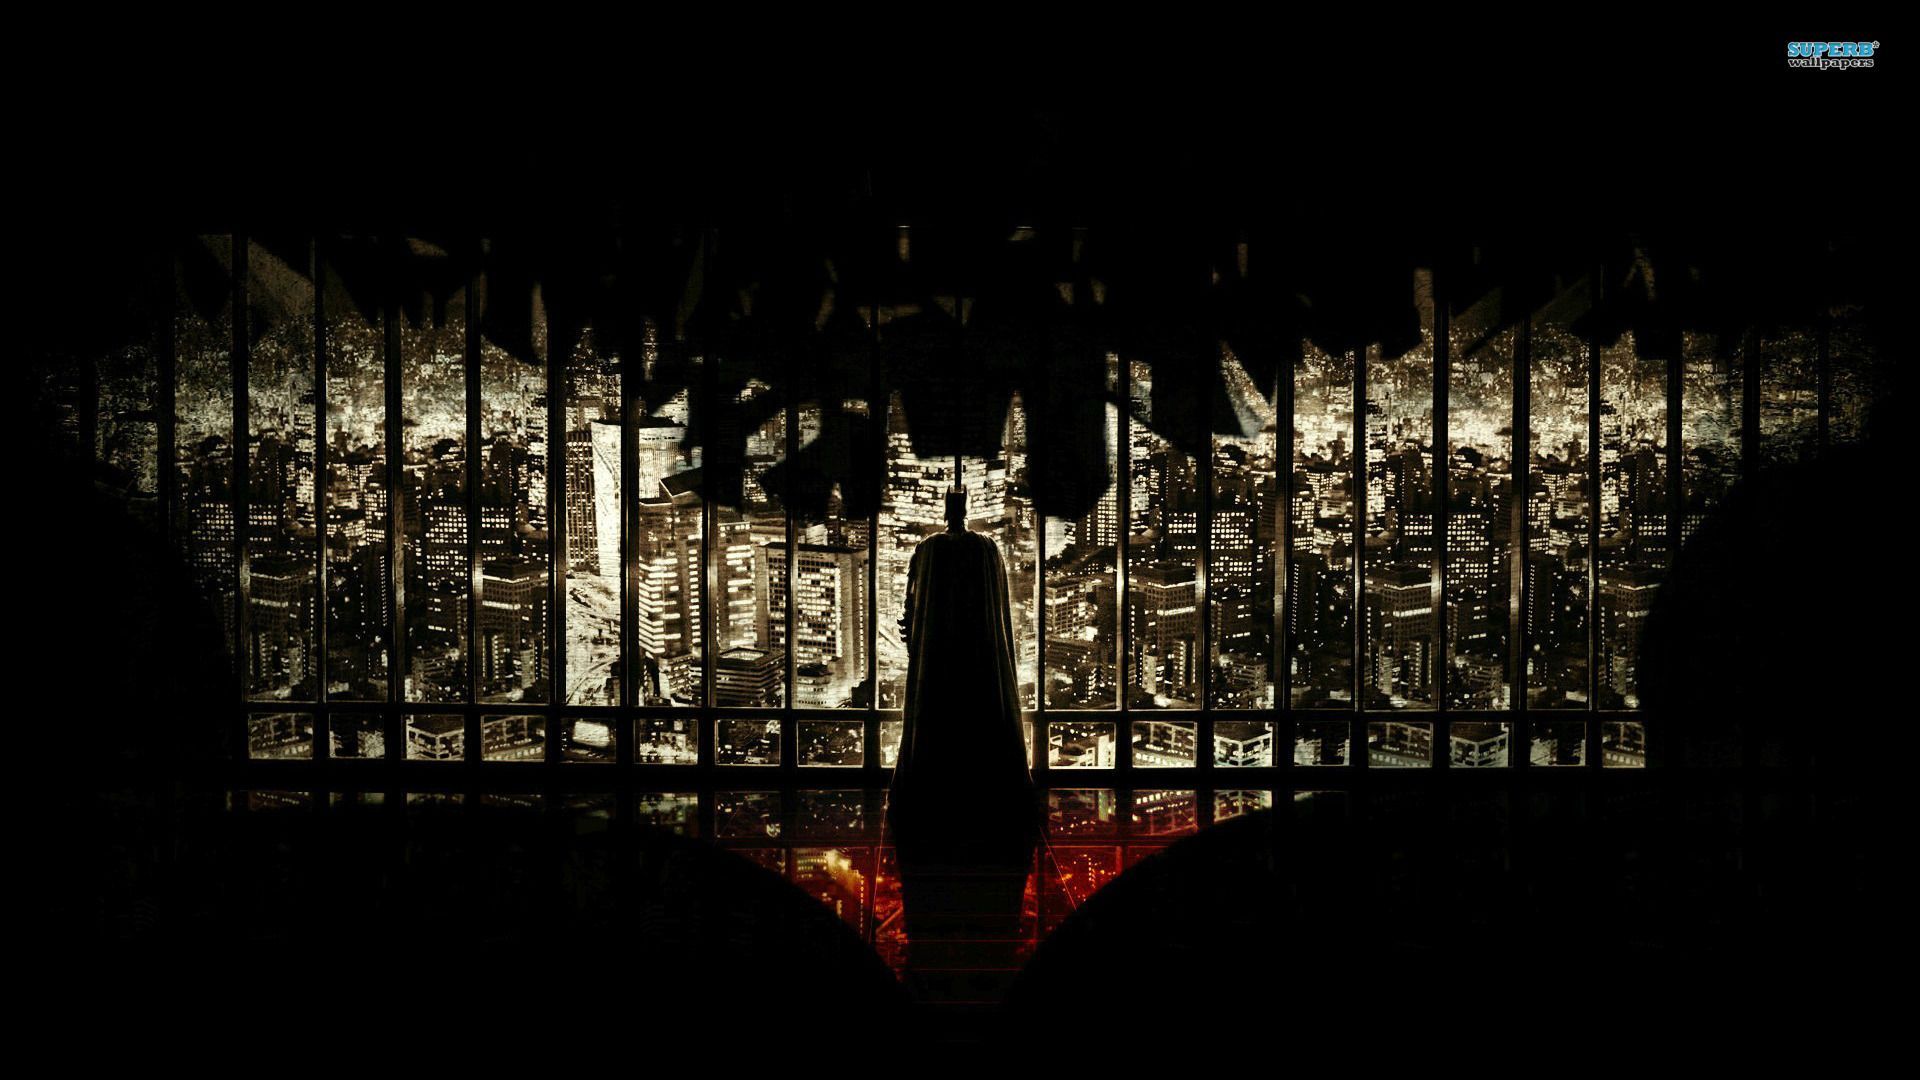 Batman - The Dark Knight Rises wallpaper - Movie wallpapers - #14639